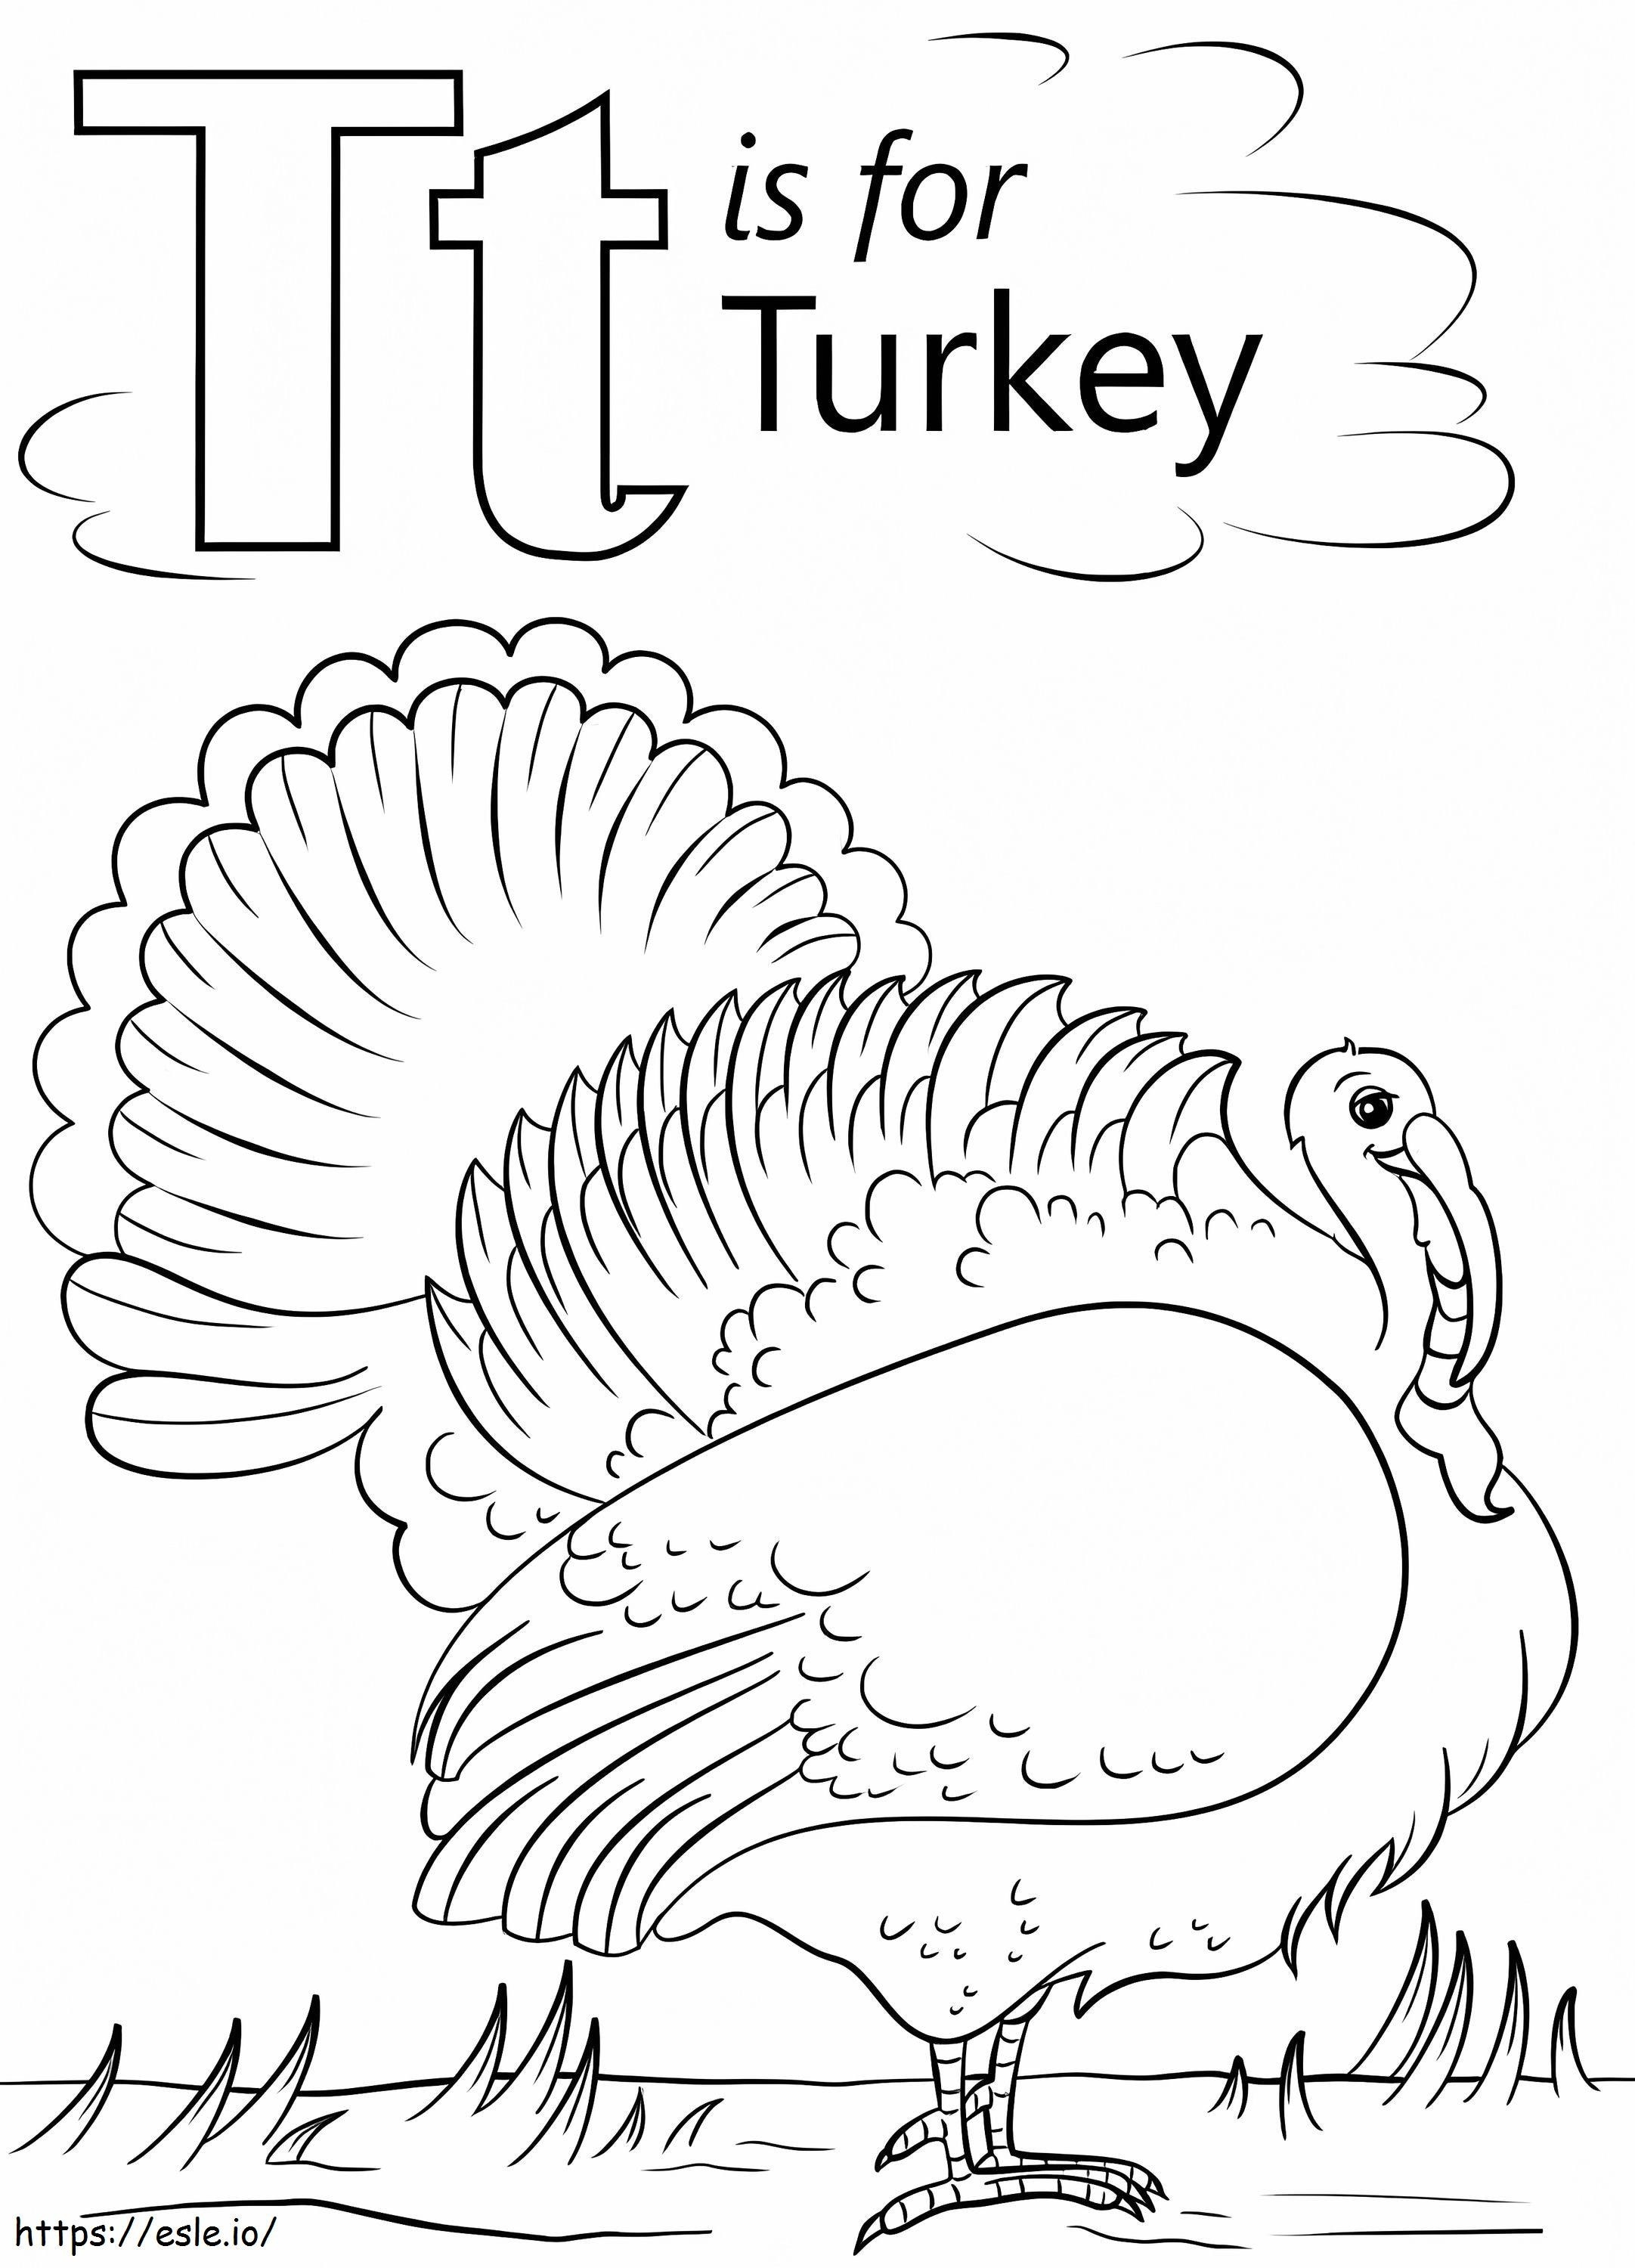 Türkiye Letter T coloring page